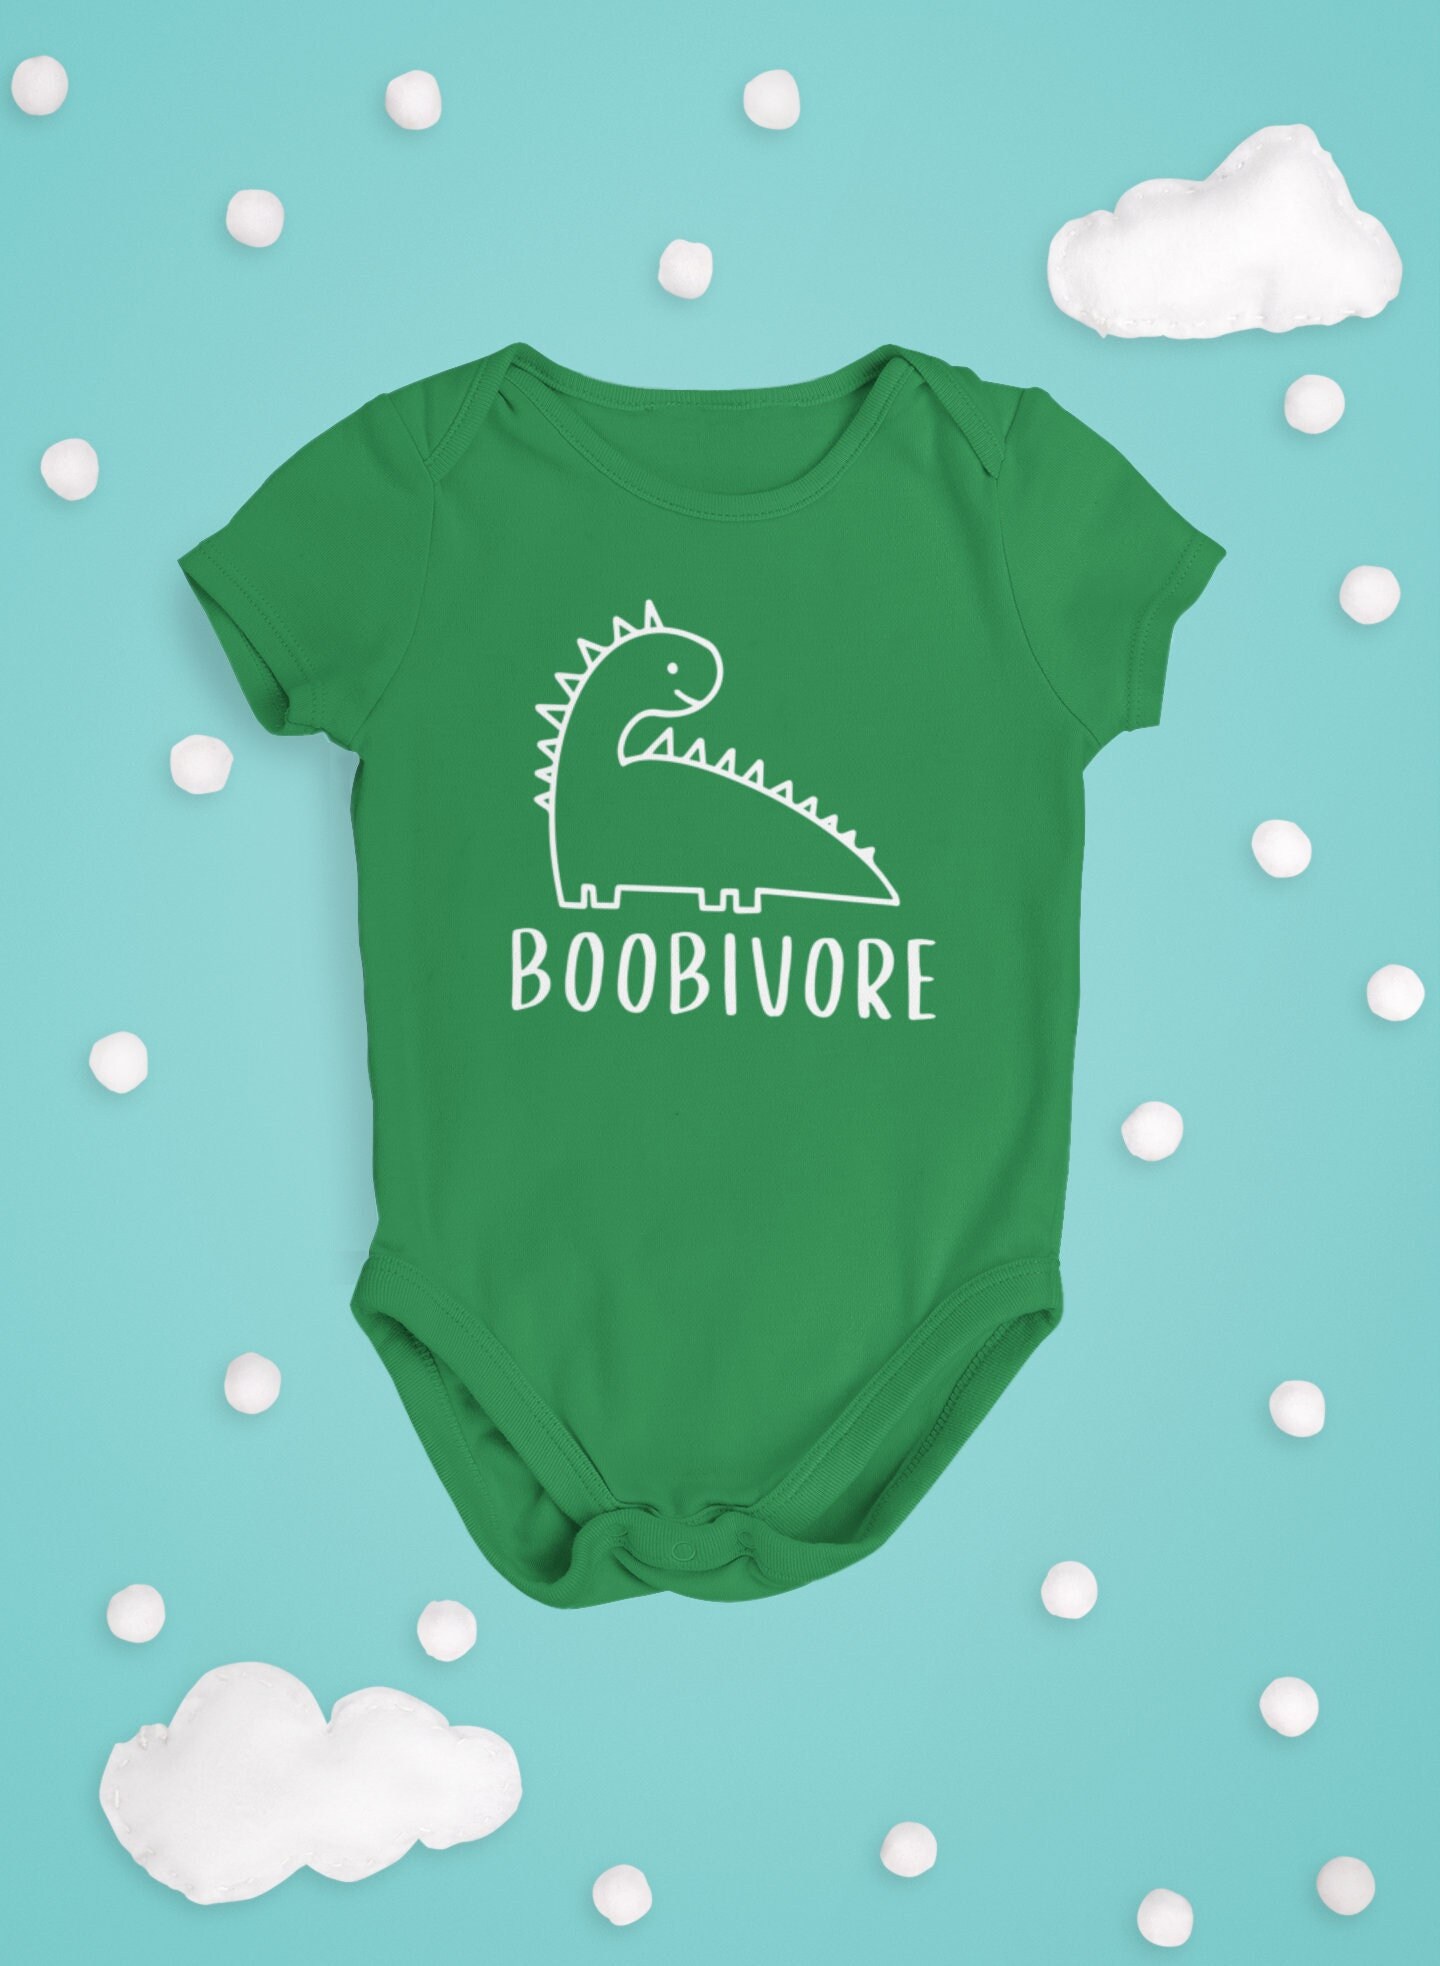 Boobivore Baby Bodysuit Adorable Breastfeeding Advocate Baby Clothing  Breastfeeding Awareness Breastfed Baby Shower Gift Idea New Mom Humor